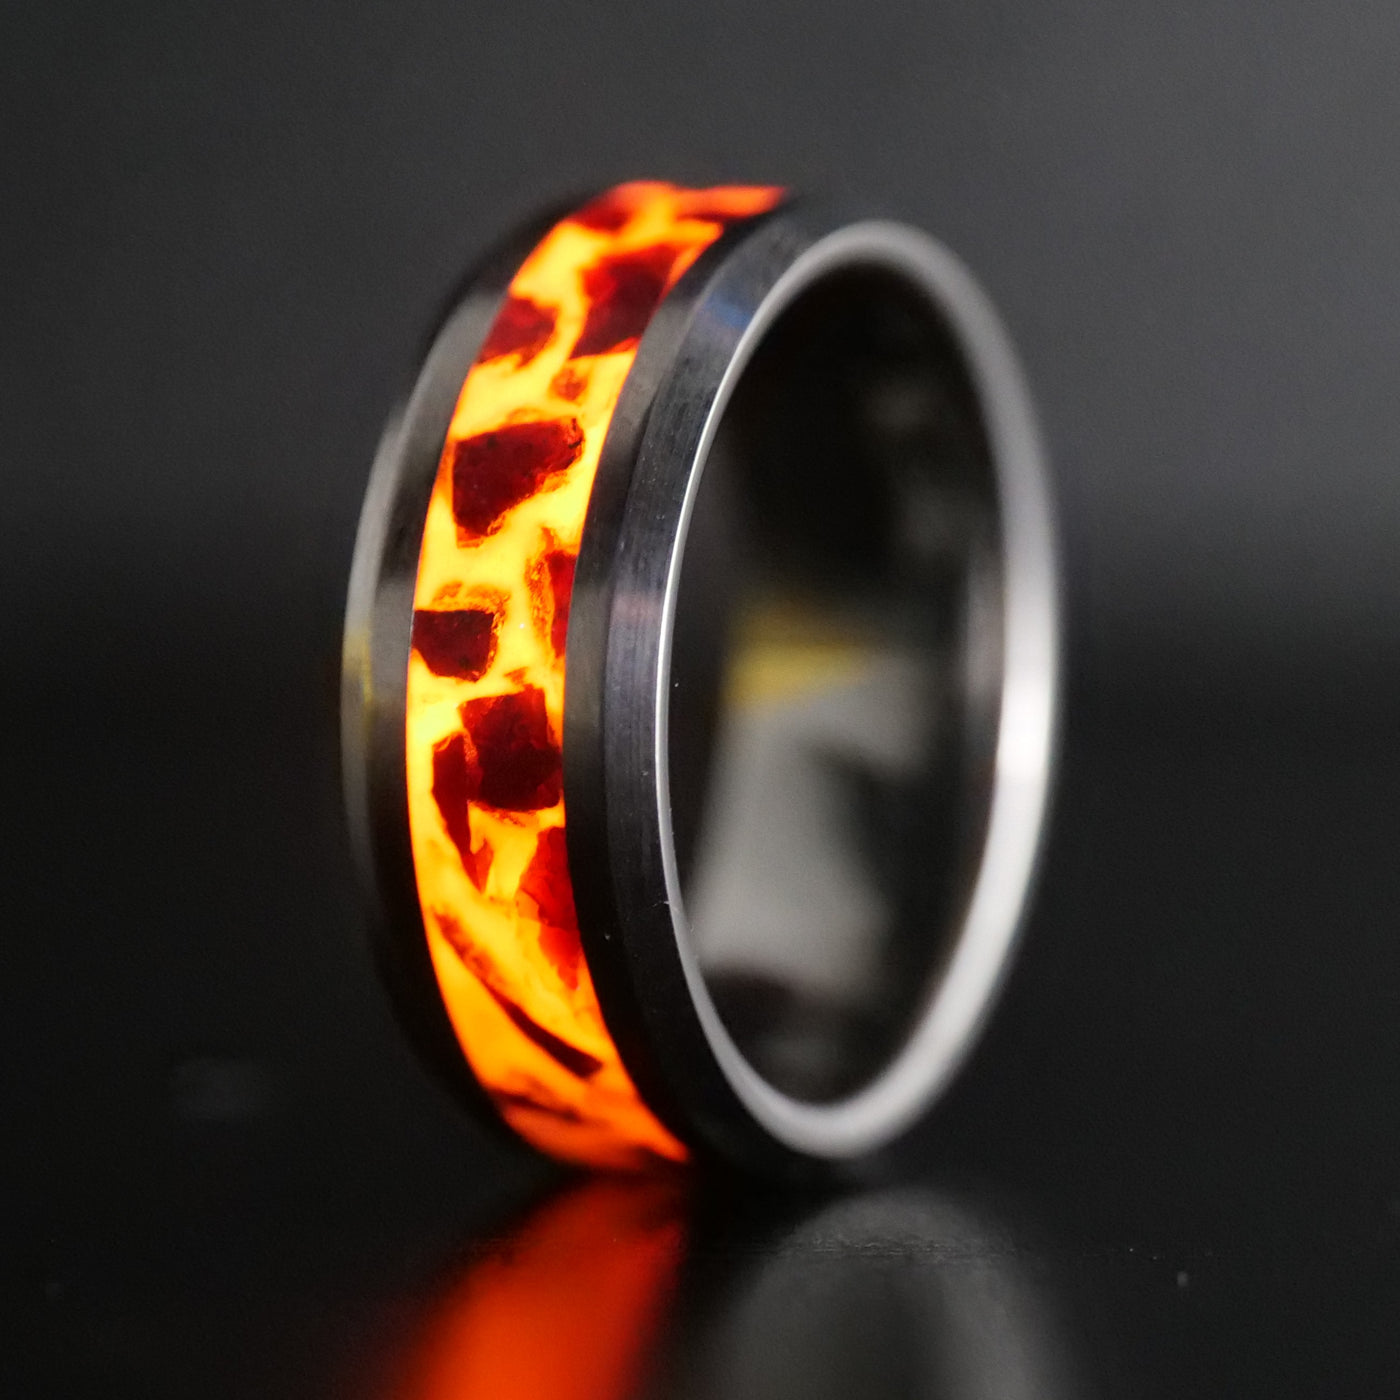 January Birthstone Ring | Garnet Glowstone Ring - Patrick Adair Designs